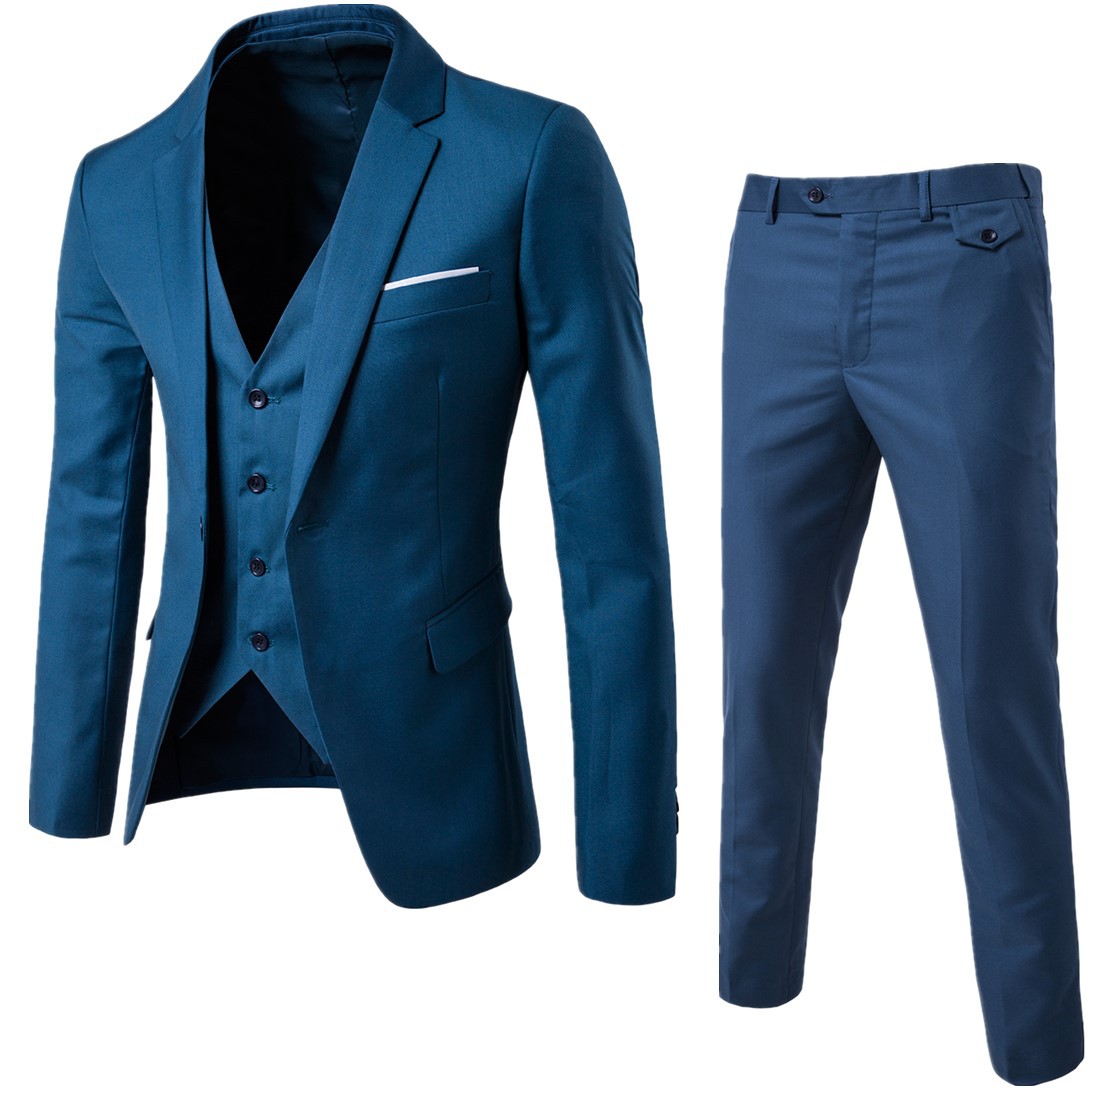 Taobao men's suit spring and autumn new two button three piece set men's Korean slim fashion bridegroom's suit